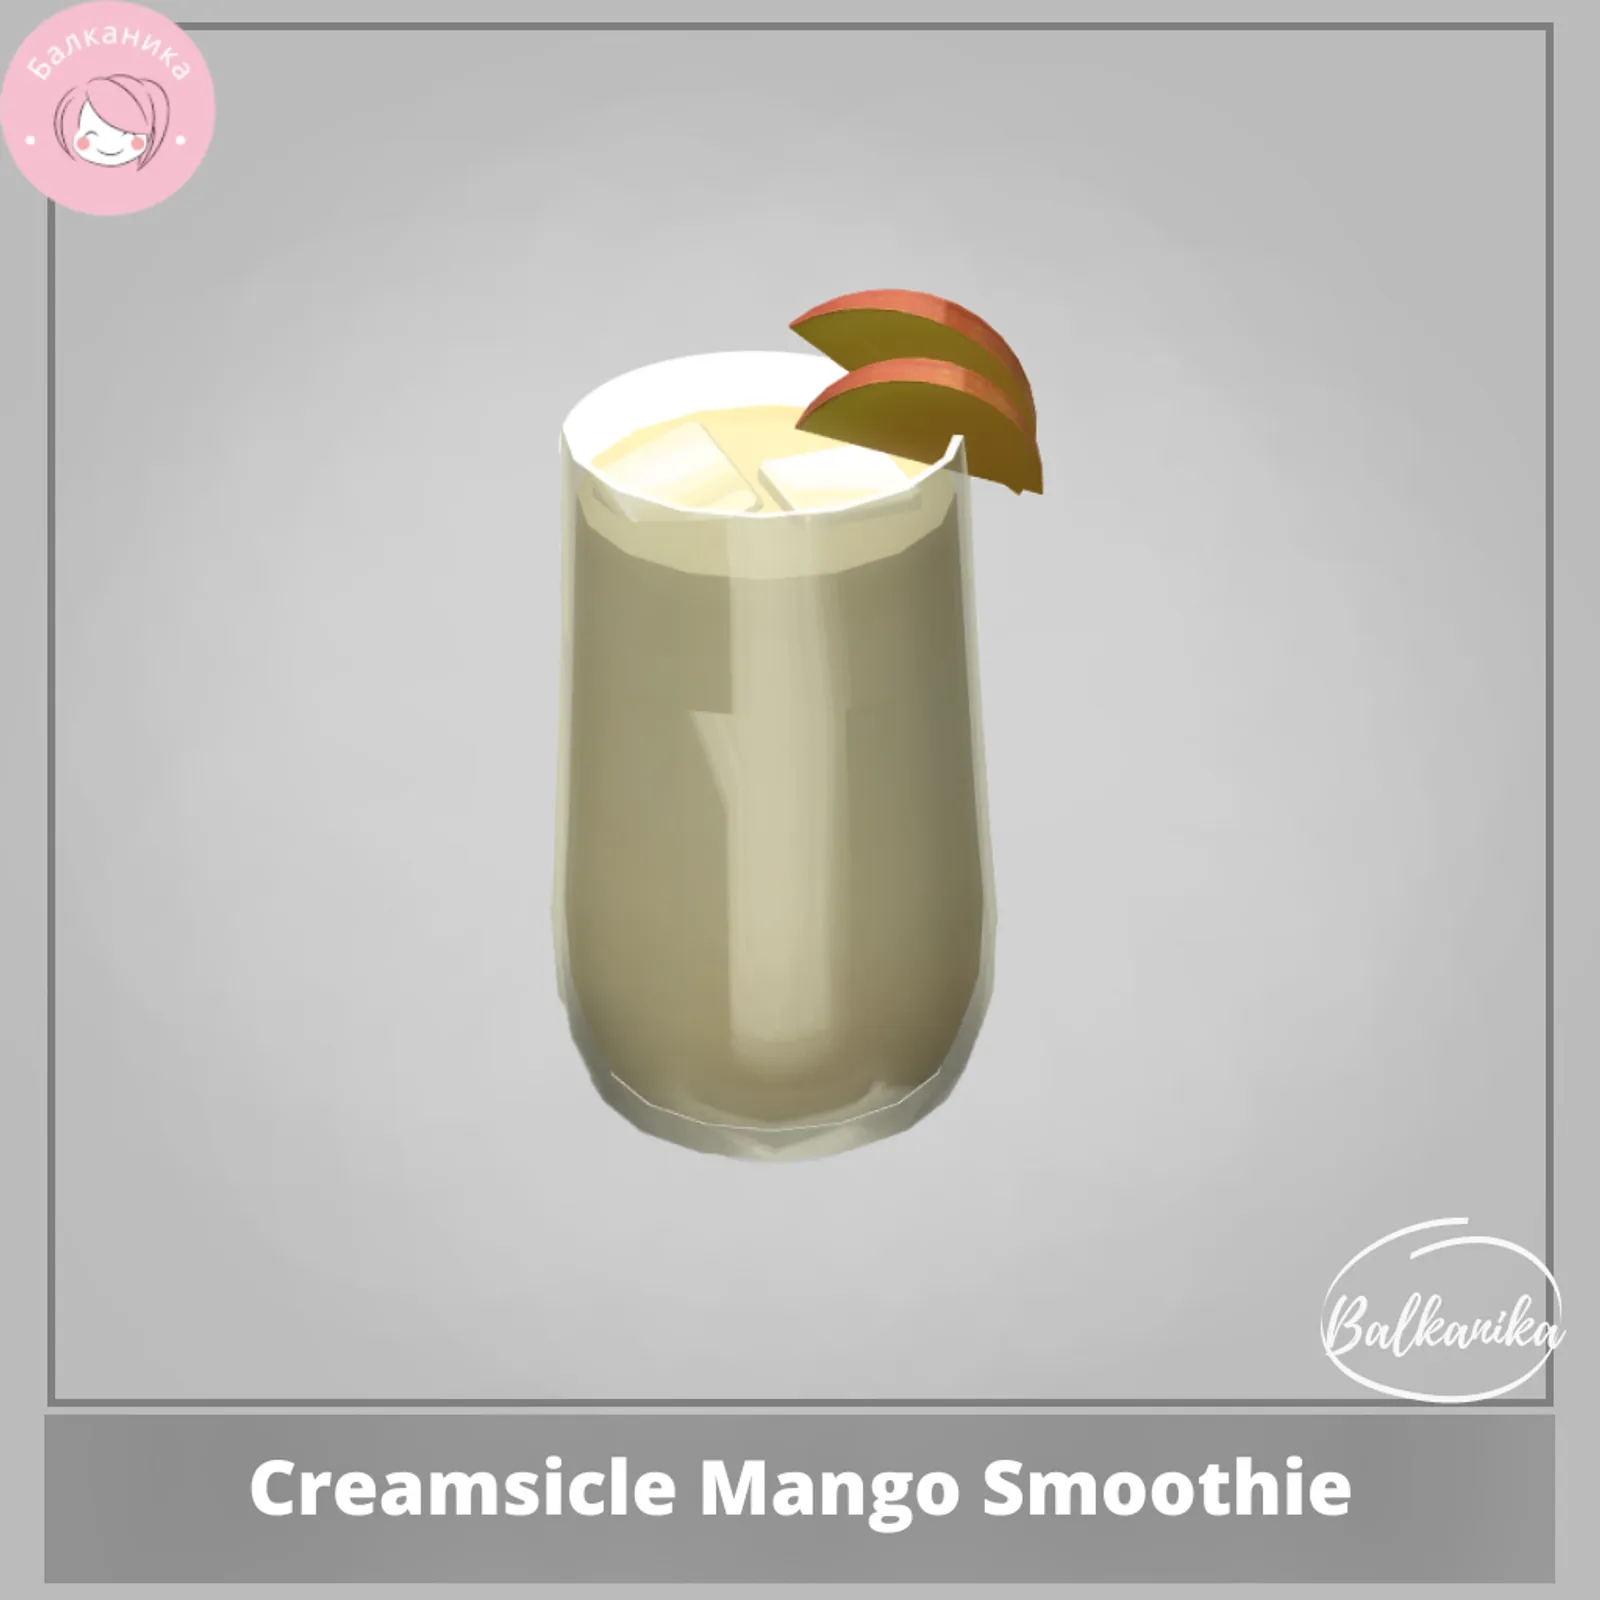 Creamsicle Mango Smoothie